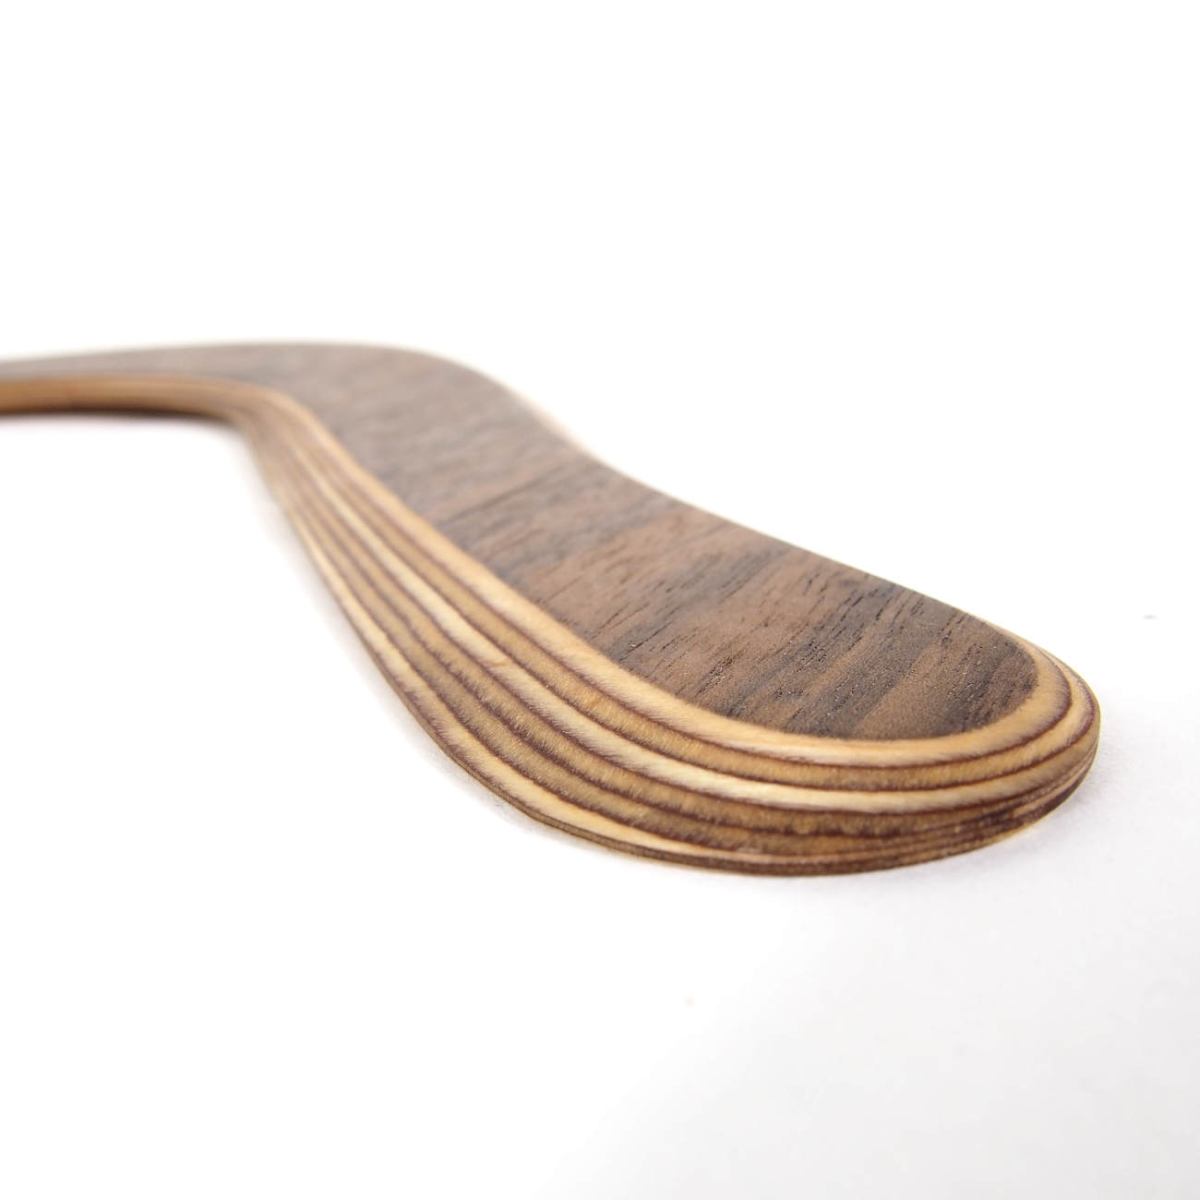 Handcrafted Triple-Wing Boomerang "Walnut" made of Birch and Walnut Wood (flies 20 m)